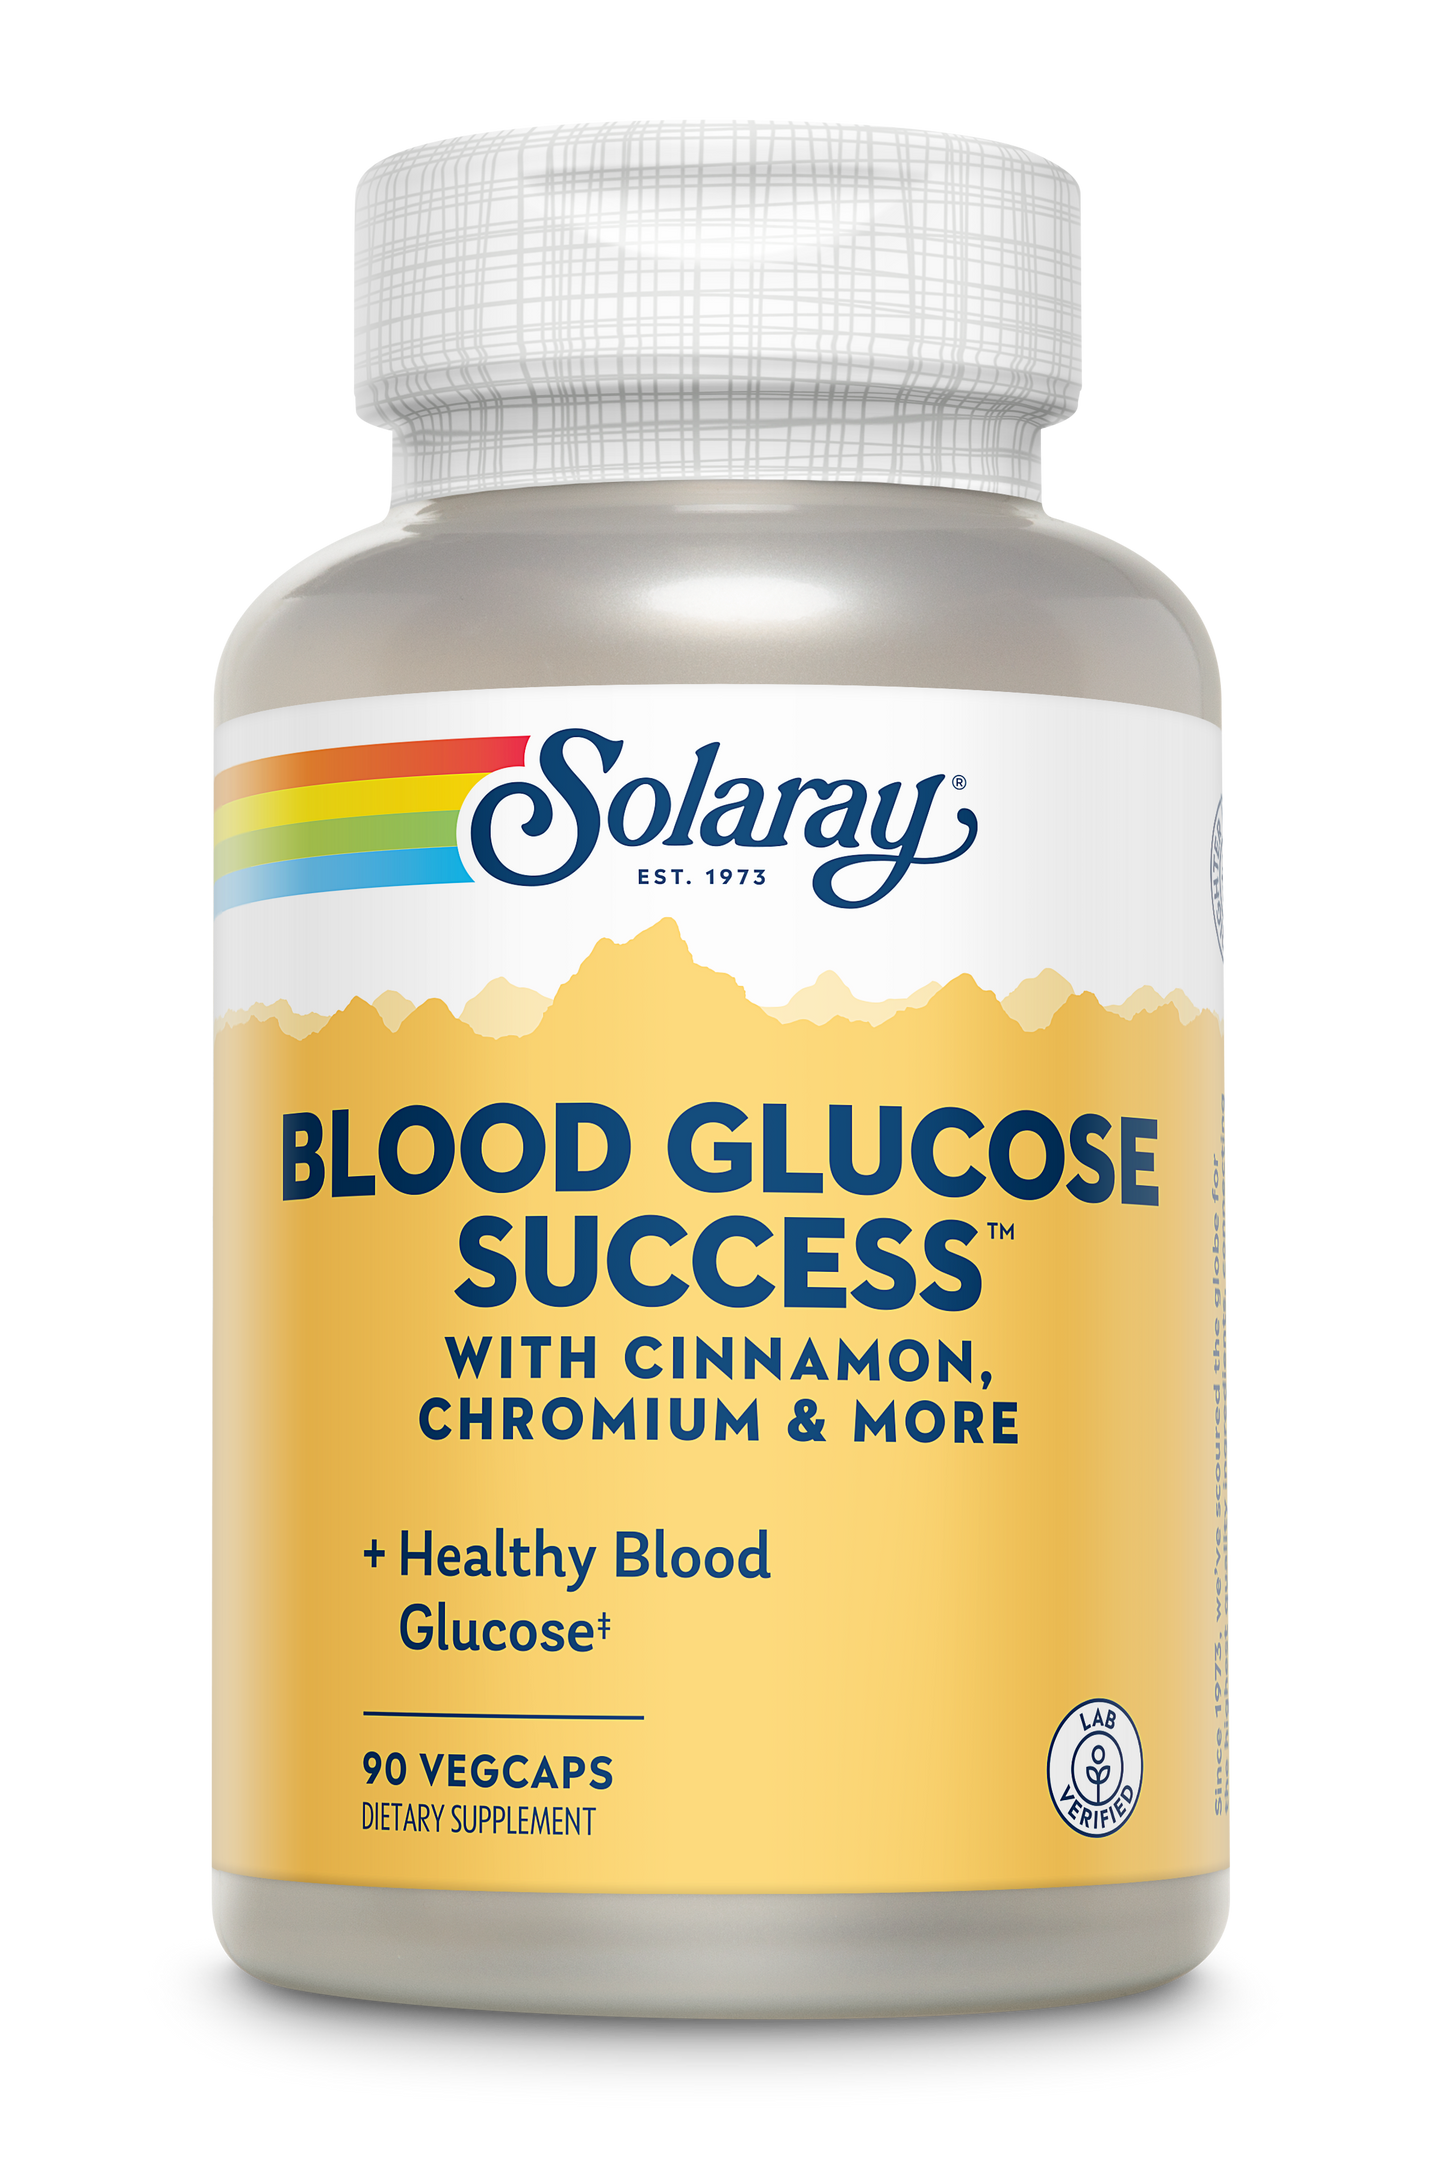 Blood Glucose Success